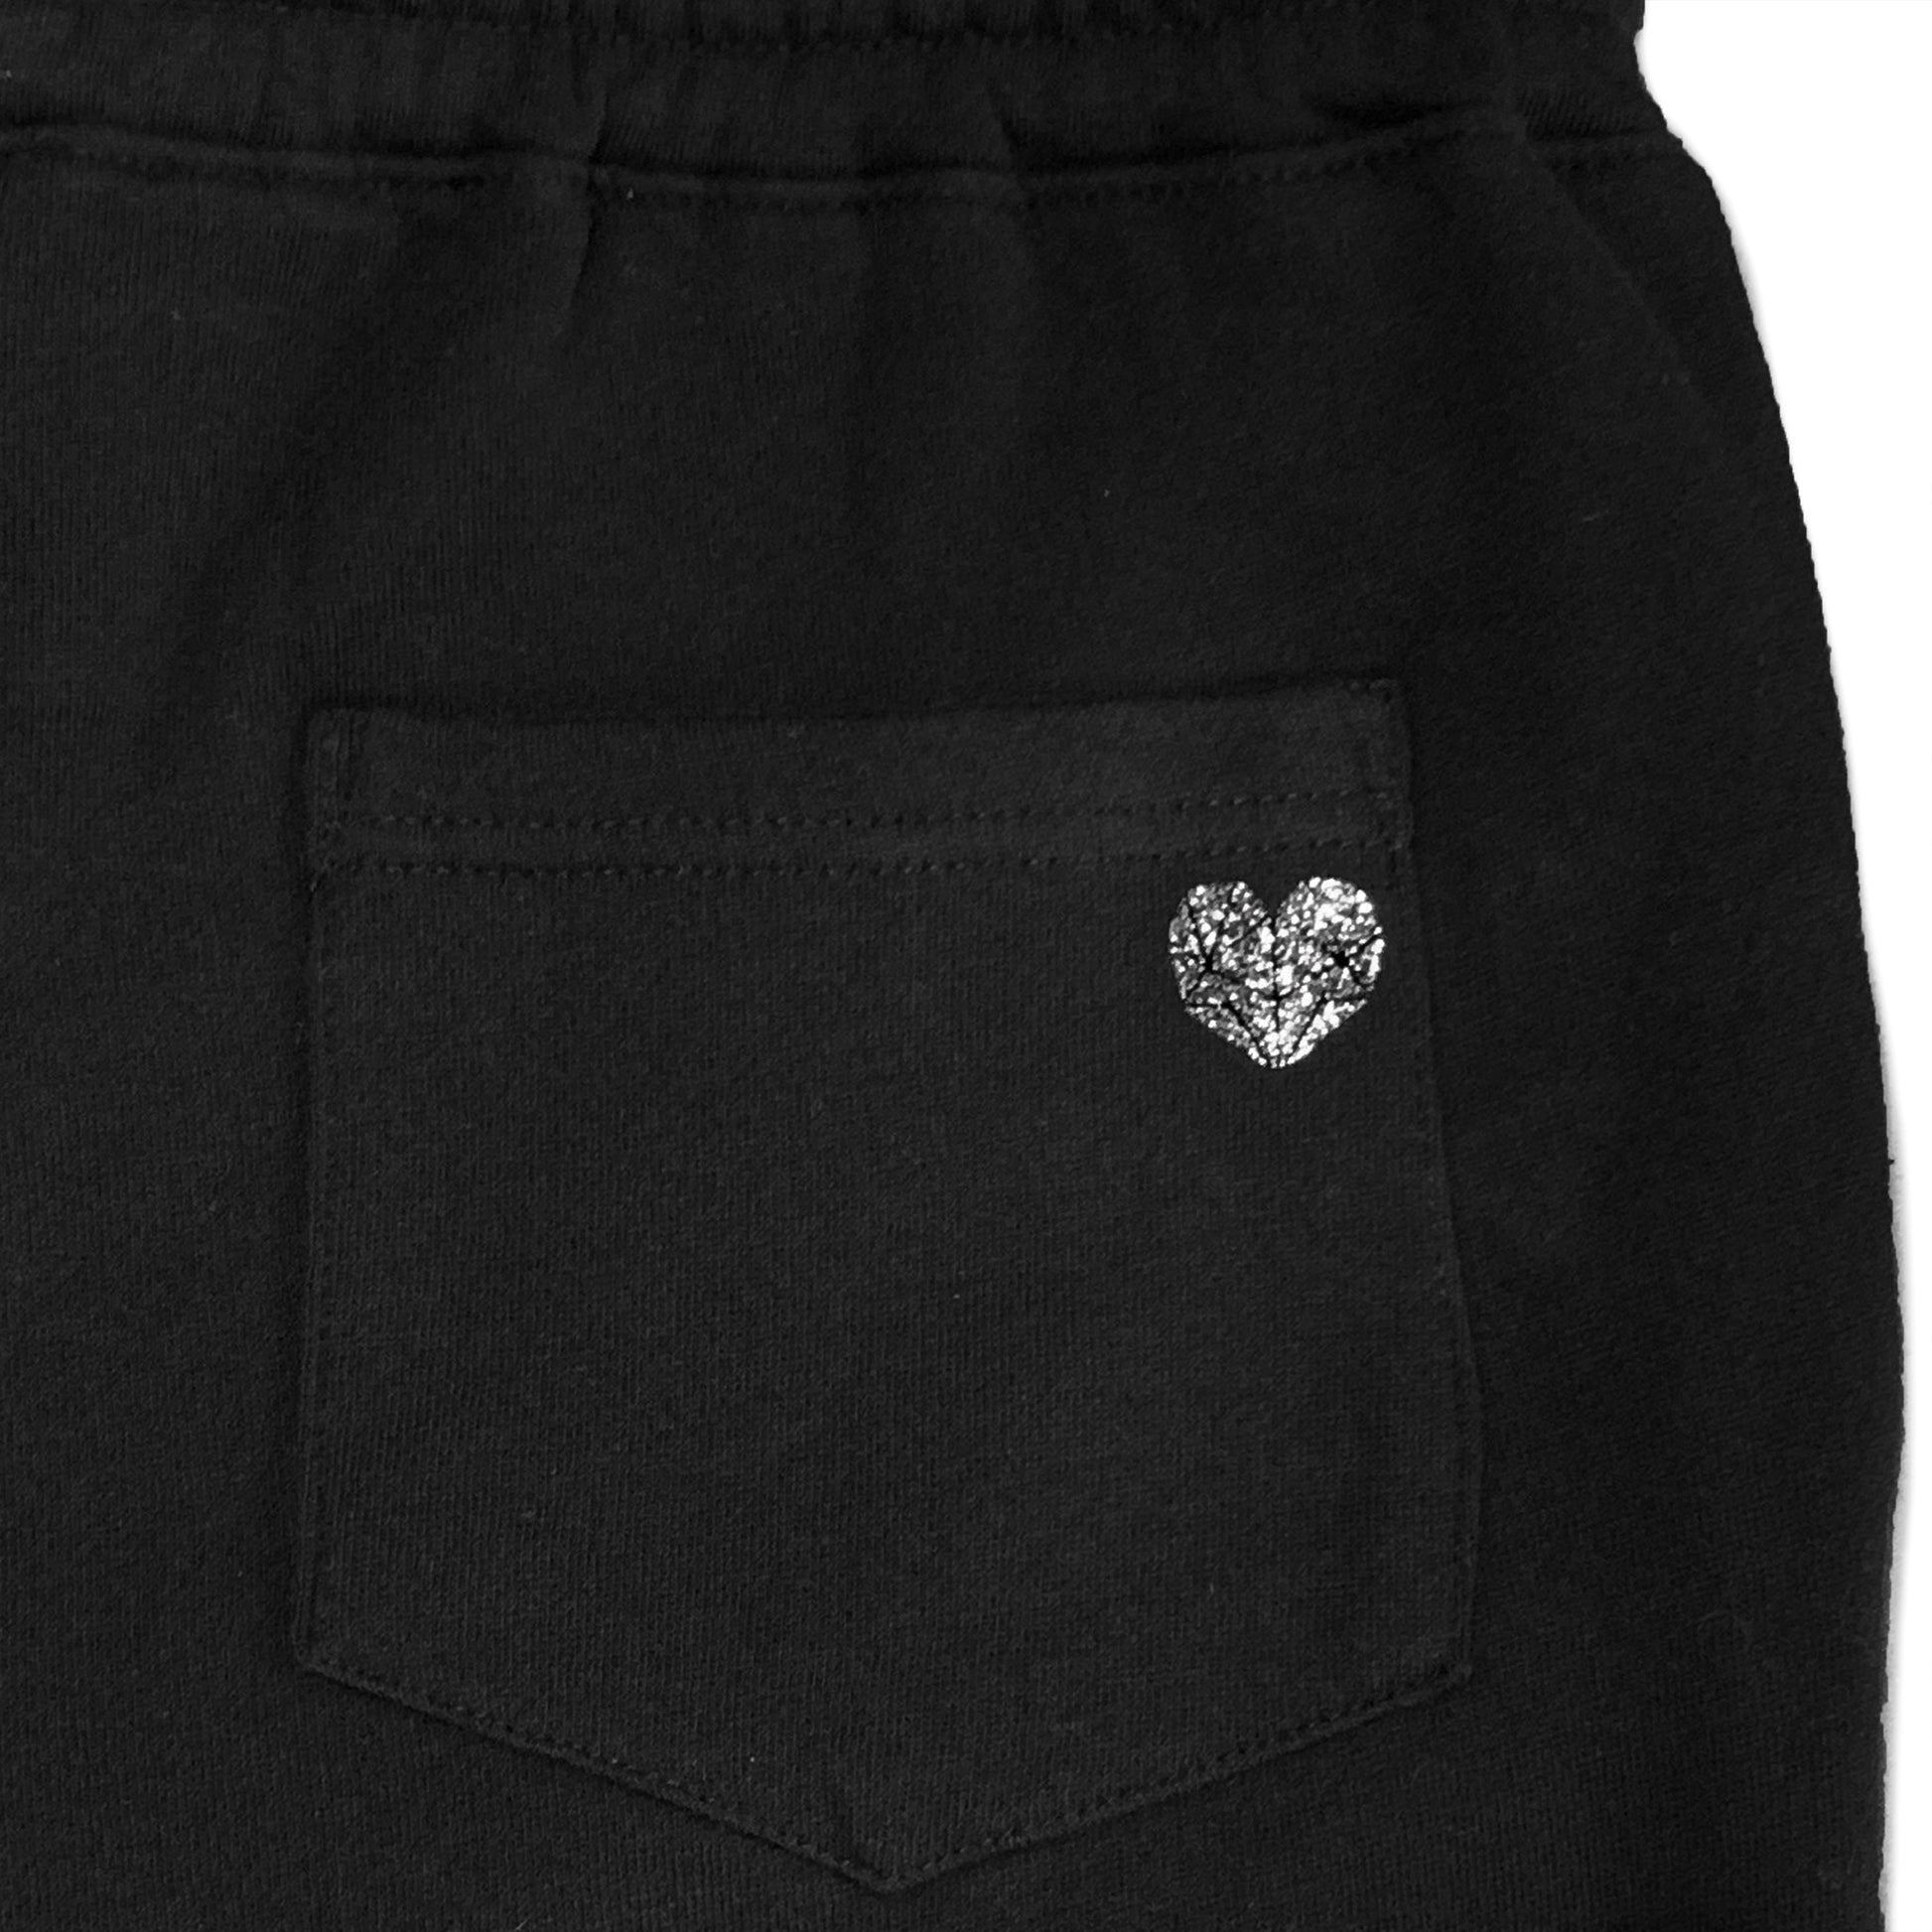 Fancy Pants back pocket heart detail - midnight sparkle on black unisex, ethically-made sweatpants by BBJ / Glitter Garage